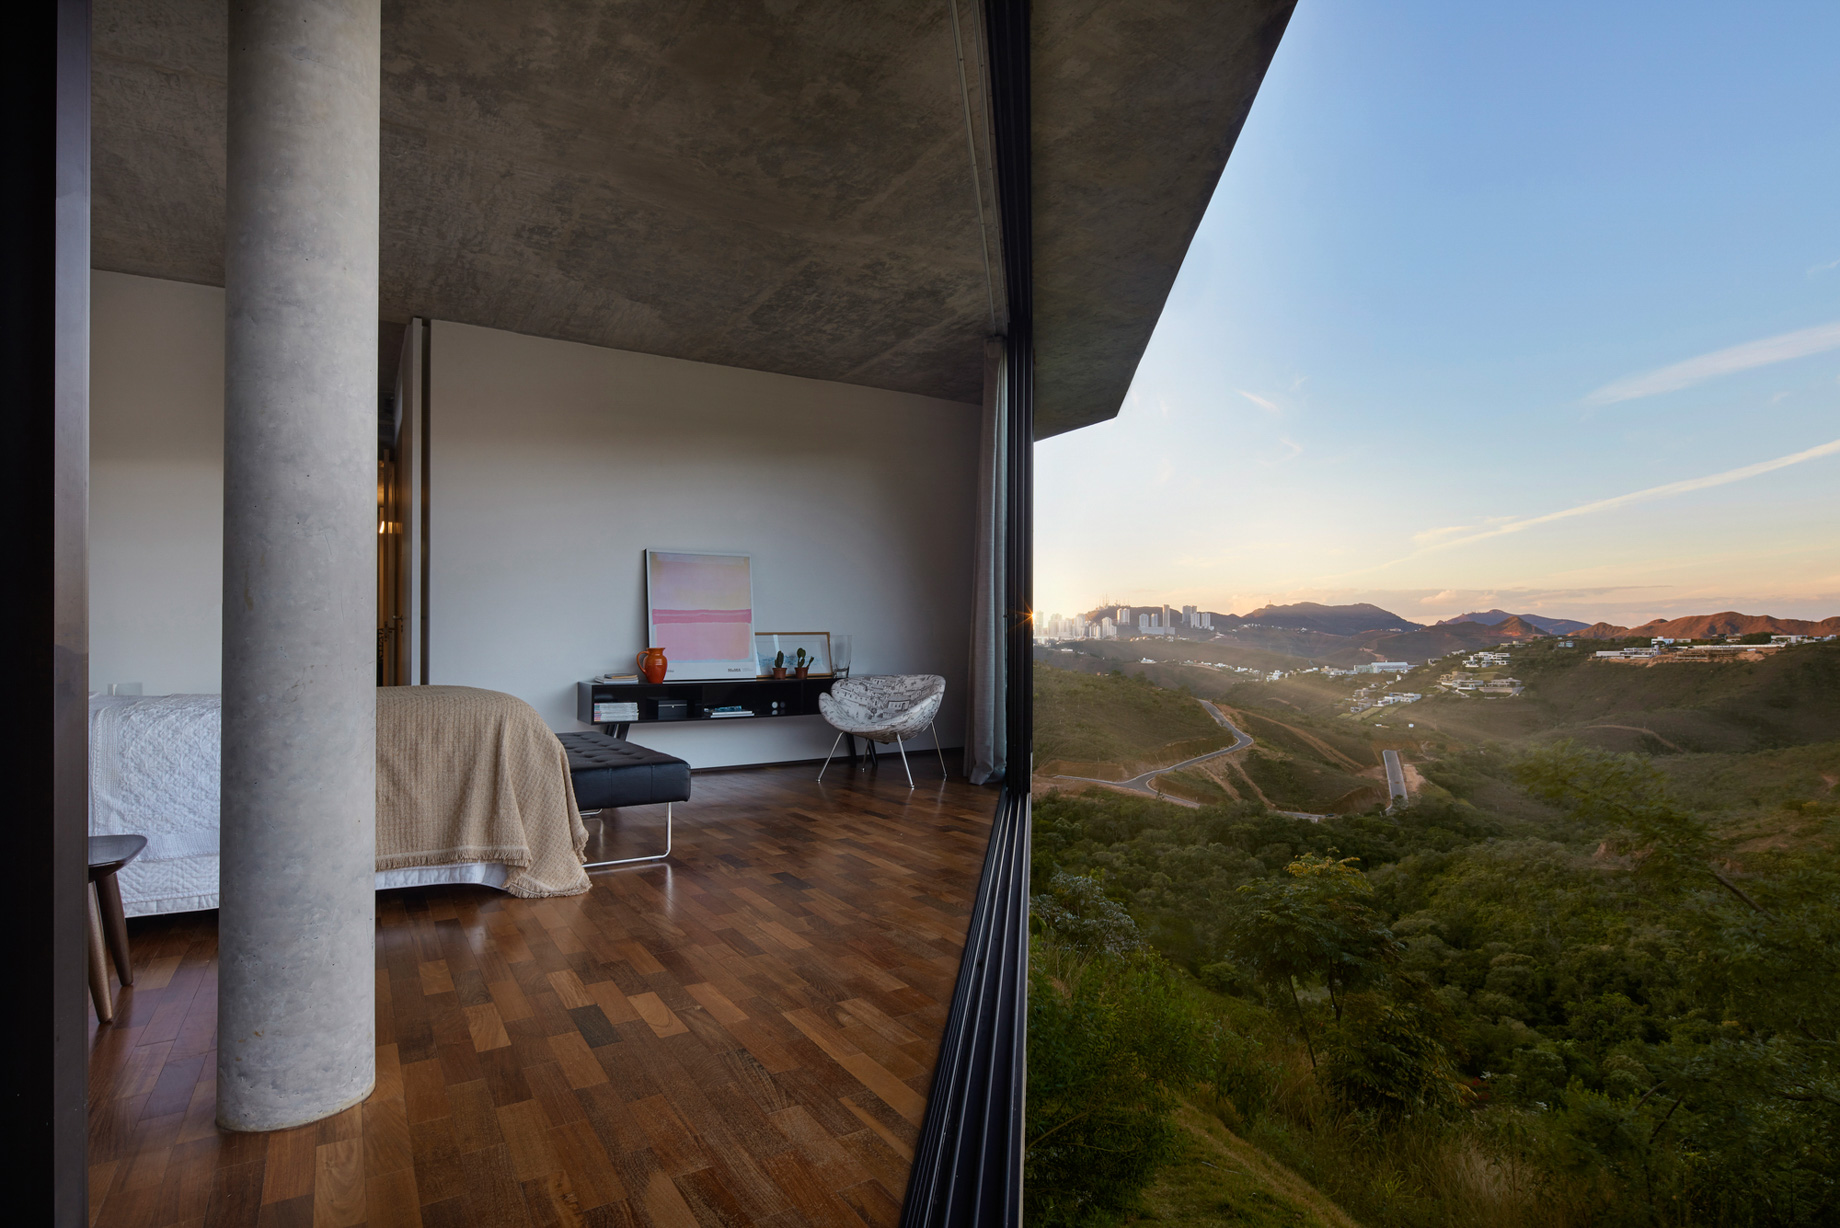 Inclined Concrete Slab House – Nova Lima, Brazil